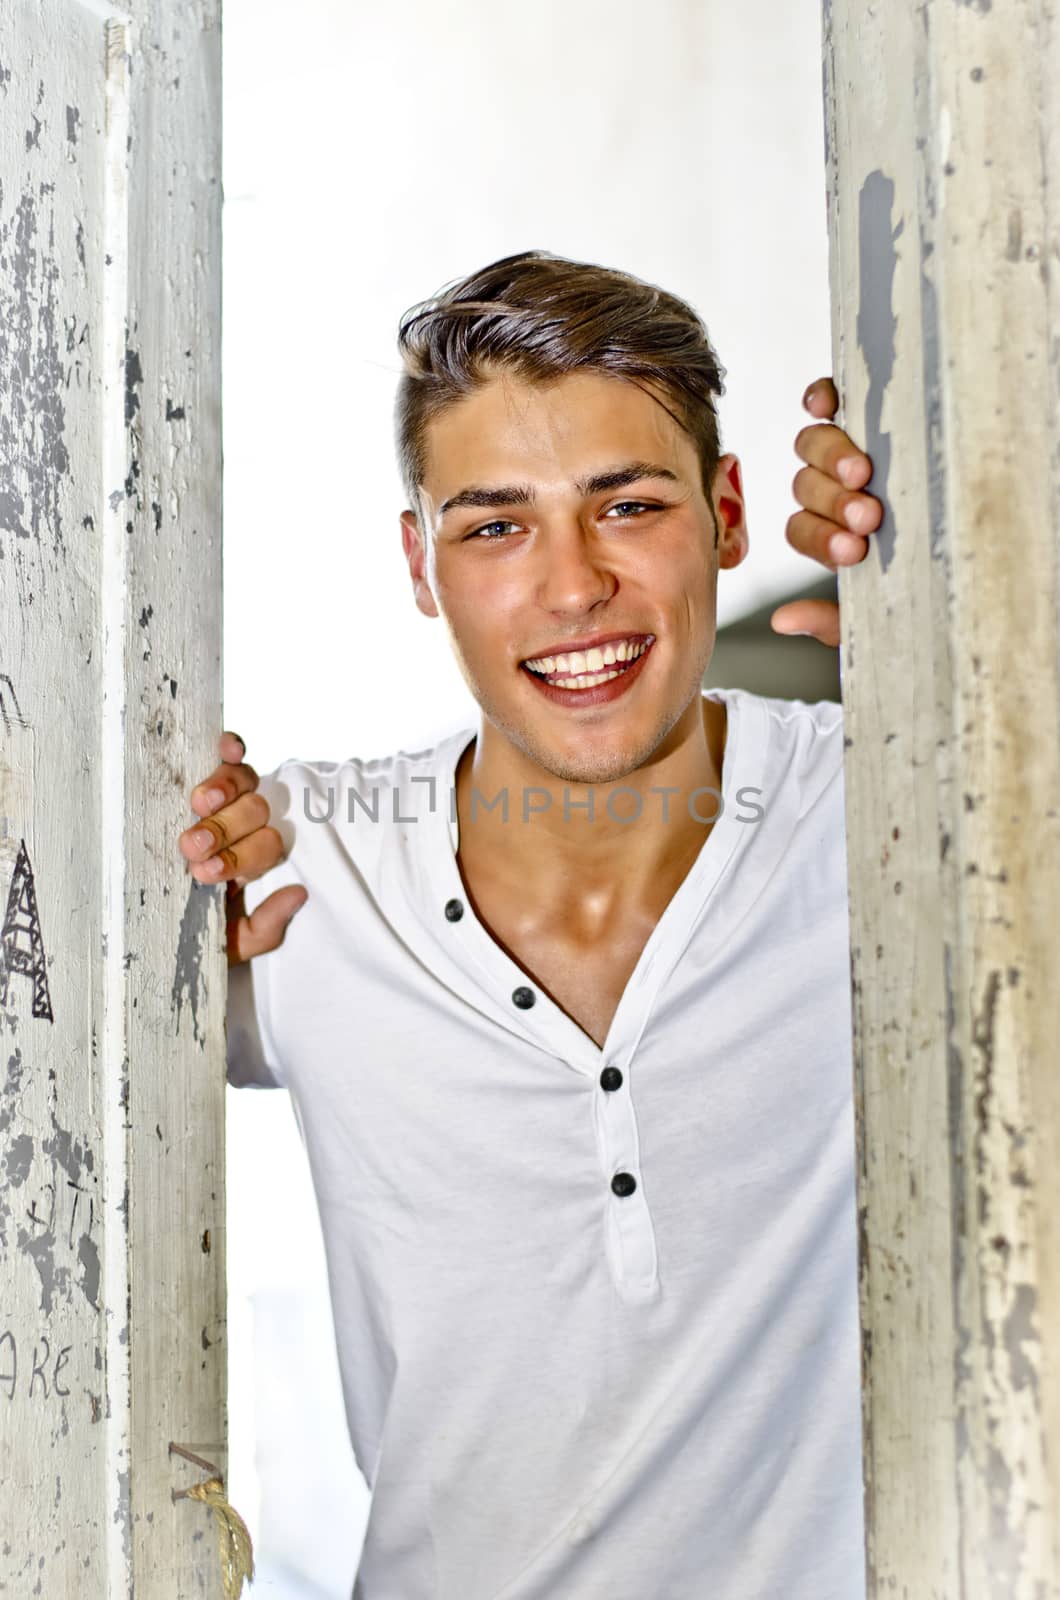 Handsome young man opening old door by artofphoto